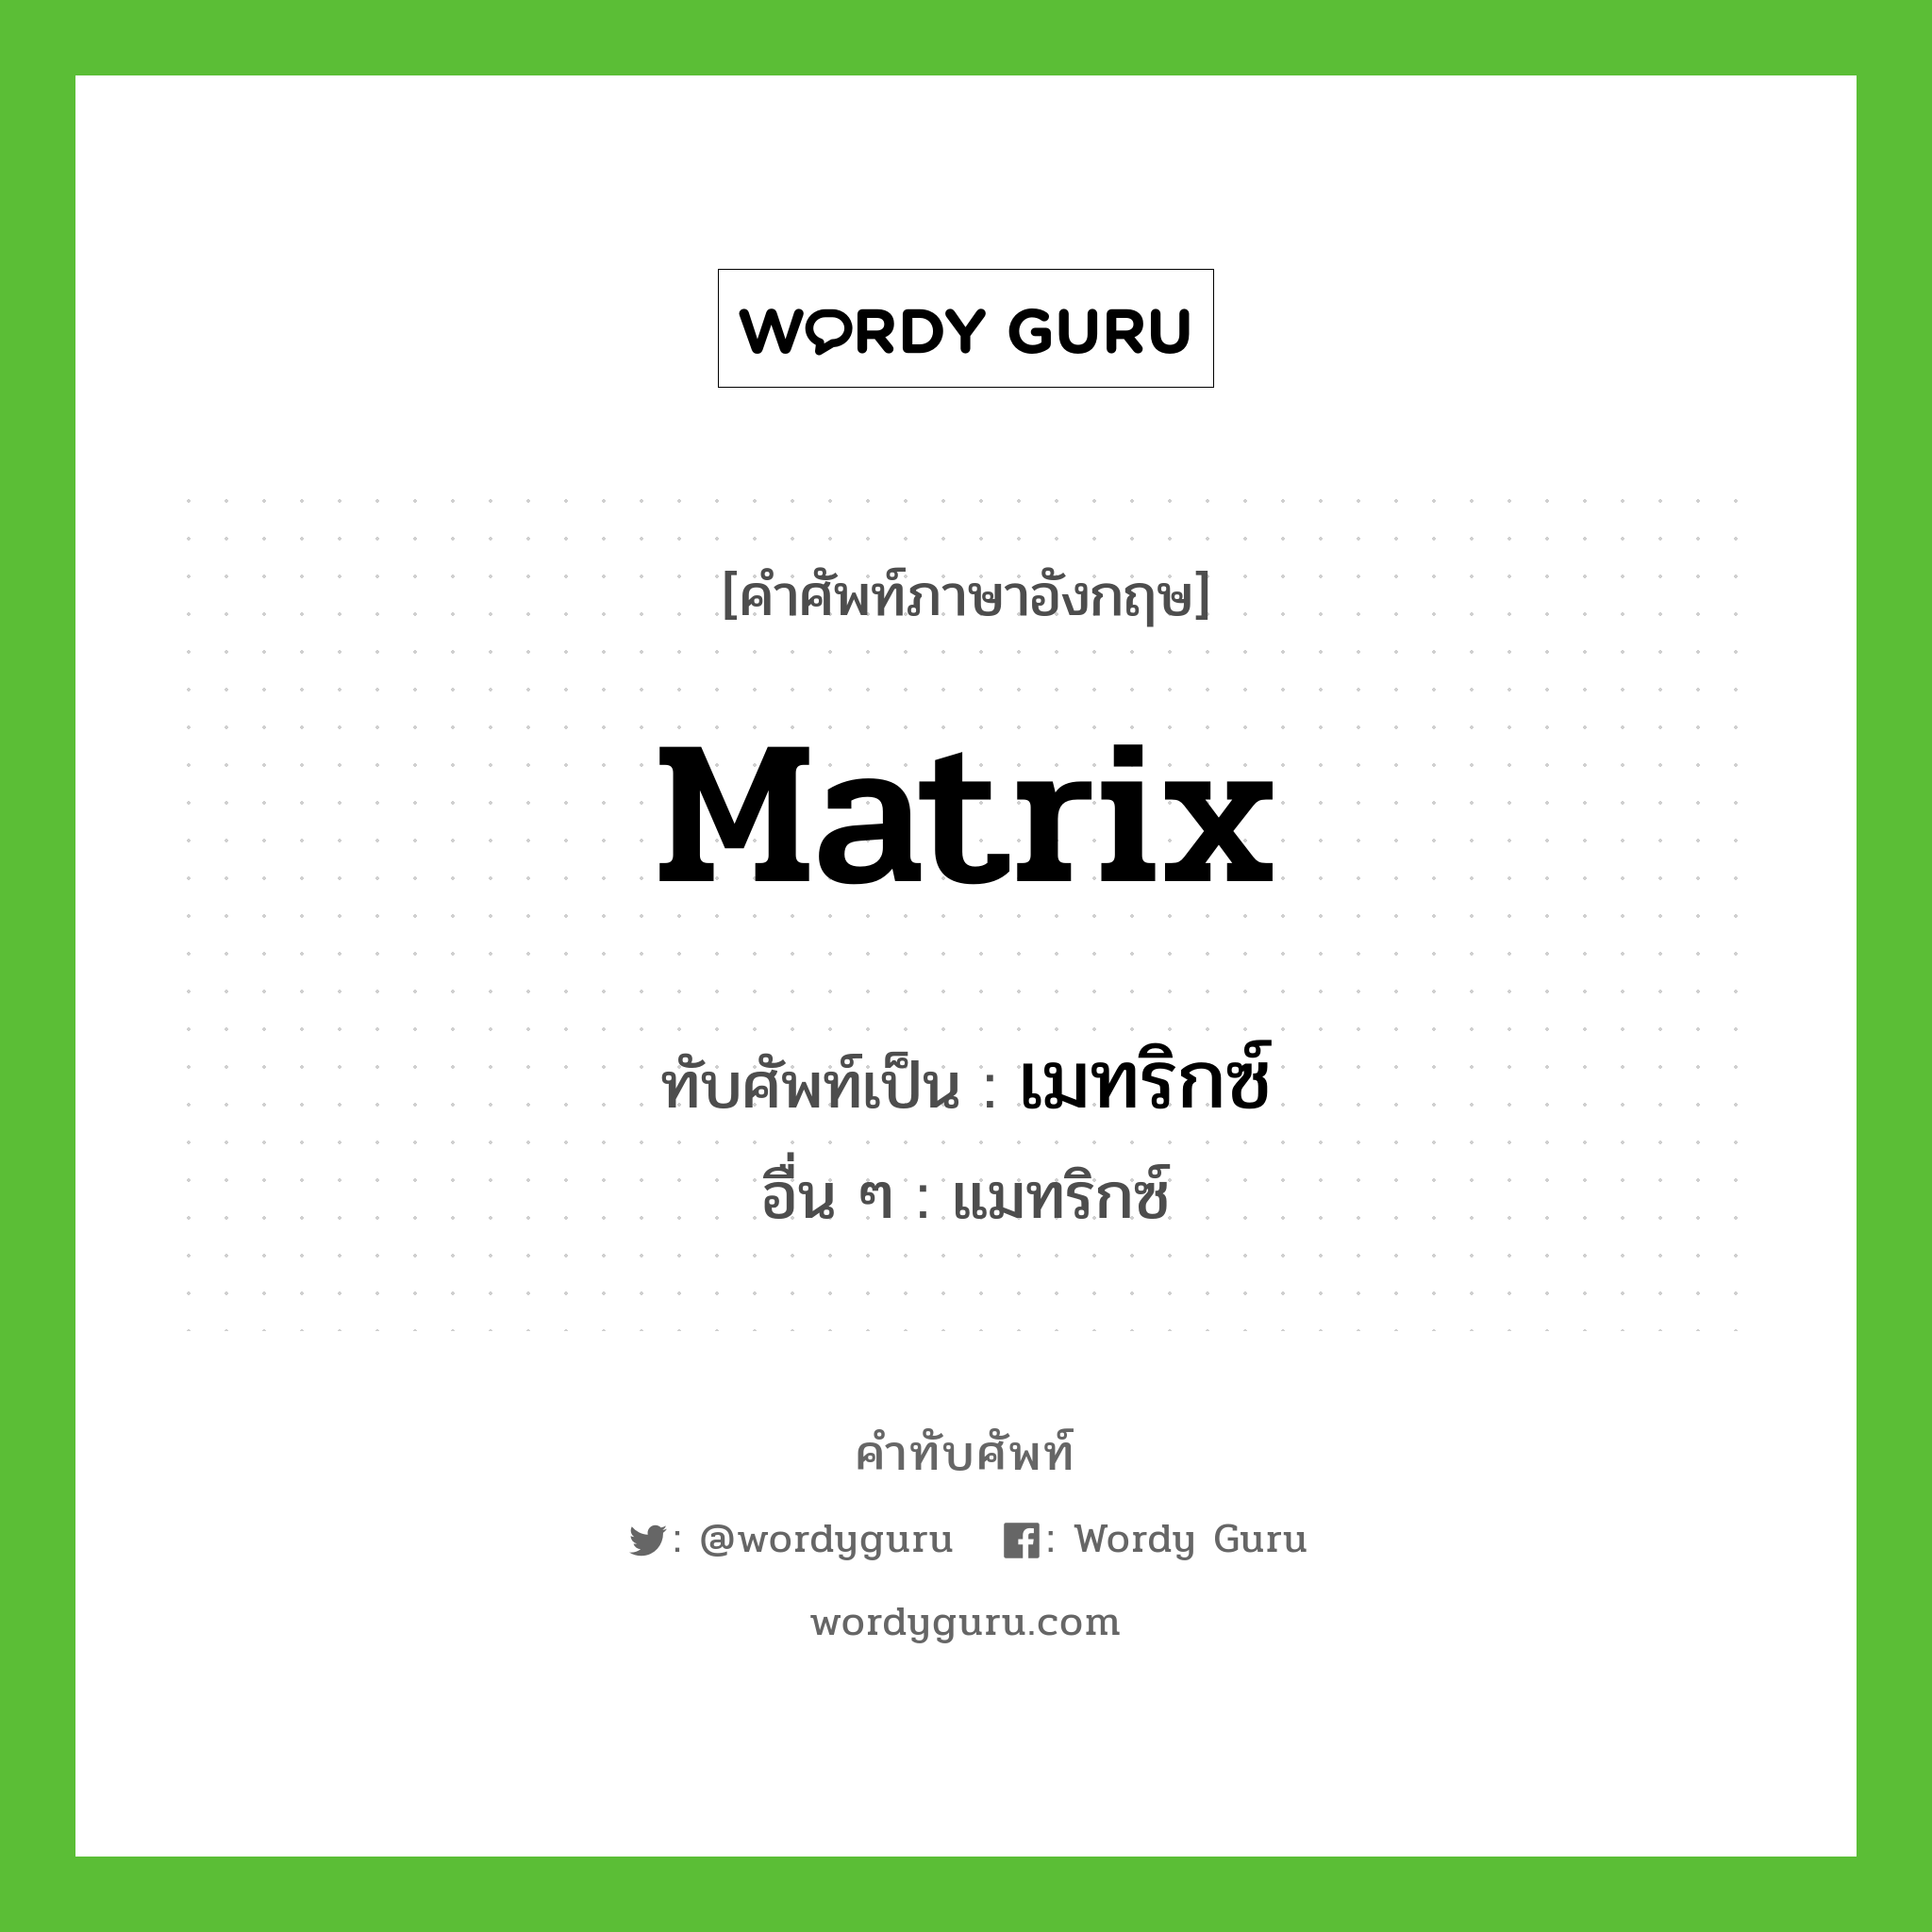 matrix เขียนเป็นคำไทยว่าอะไร?, คำศัพท์ภาษาอังกฤษ matrix ทับศัพท์เป็น เมทริกซ์ อื่น ๆ แมทริกซ์